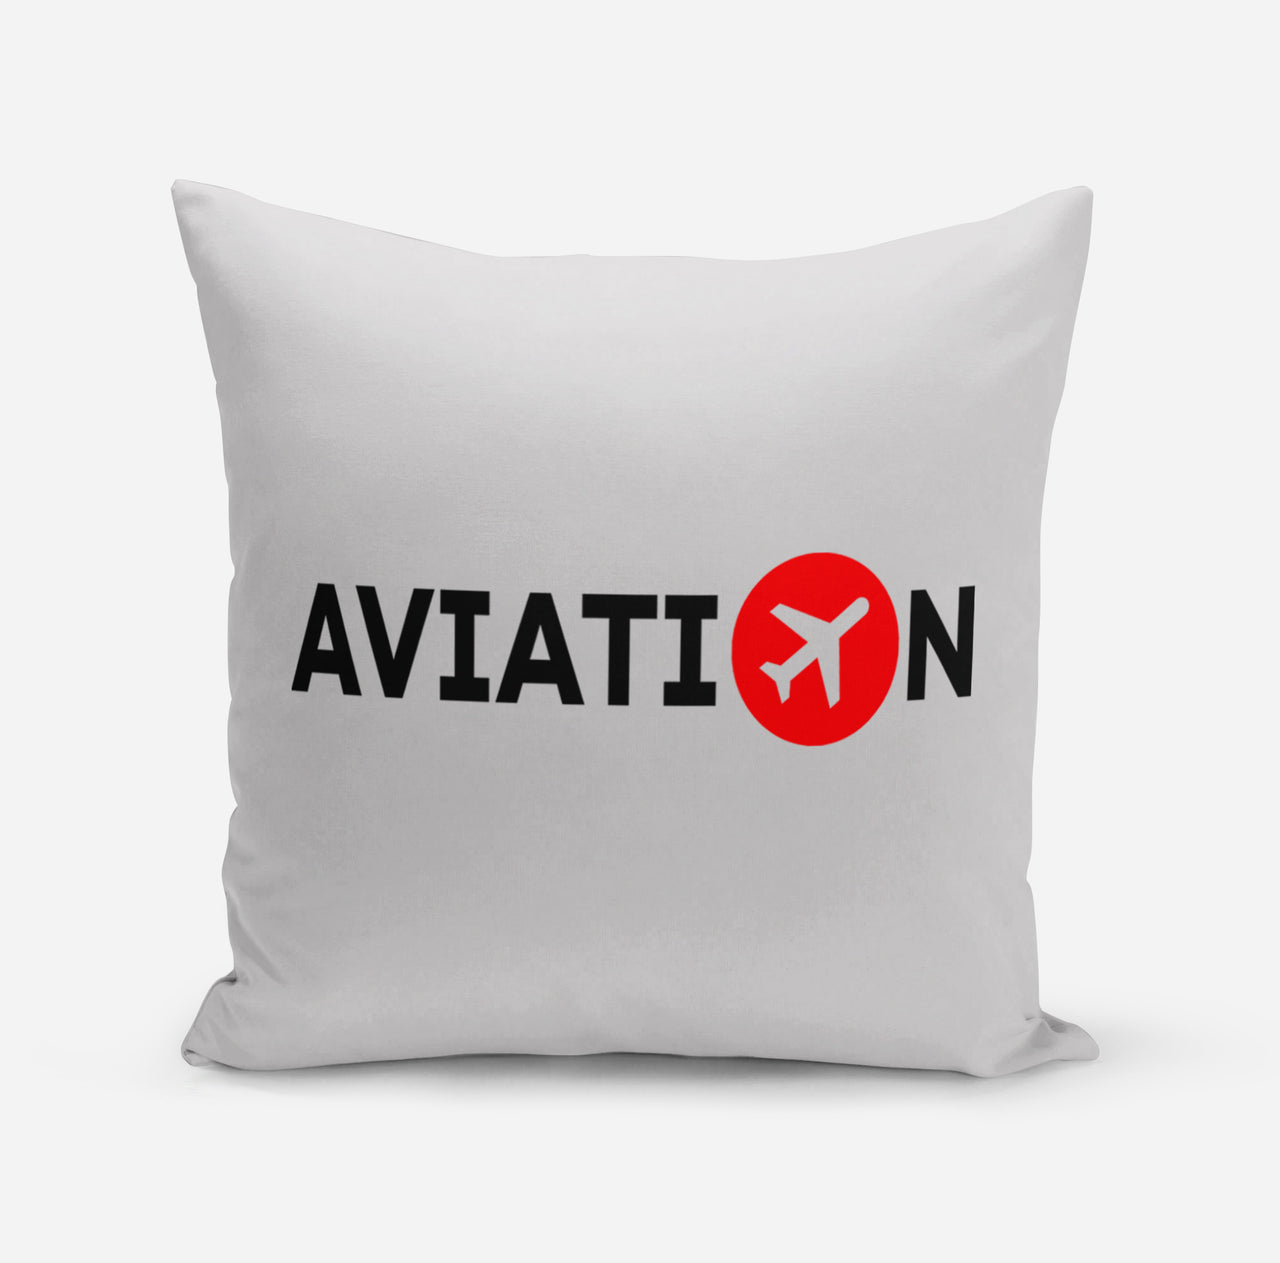 Aviation Designed Pillows